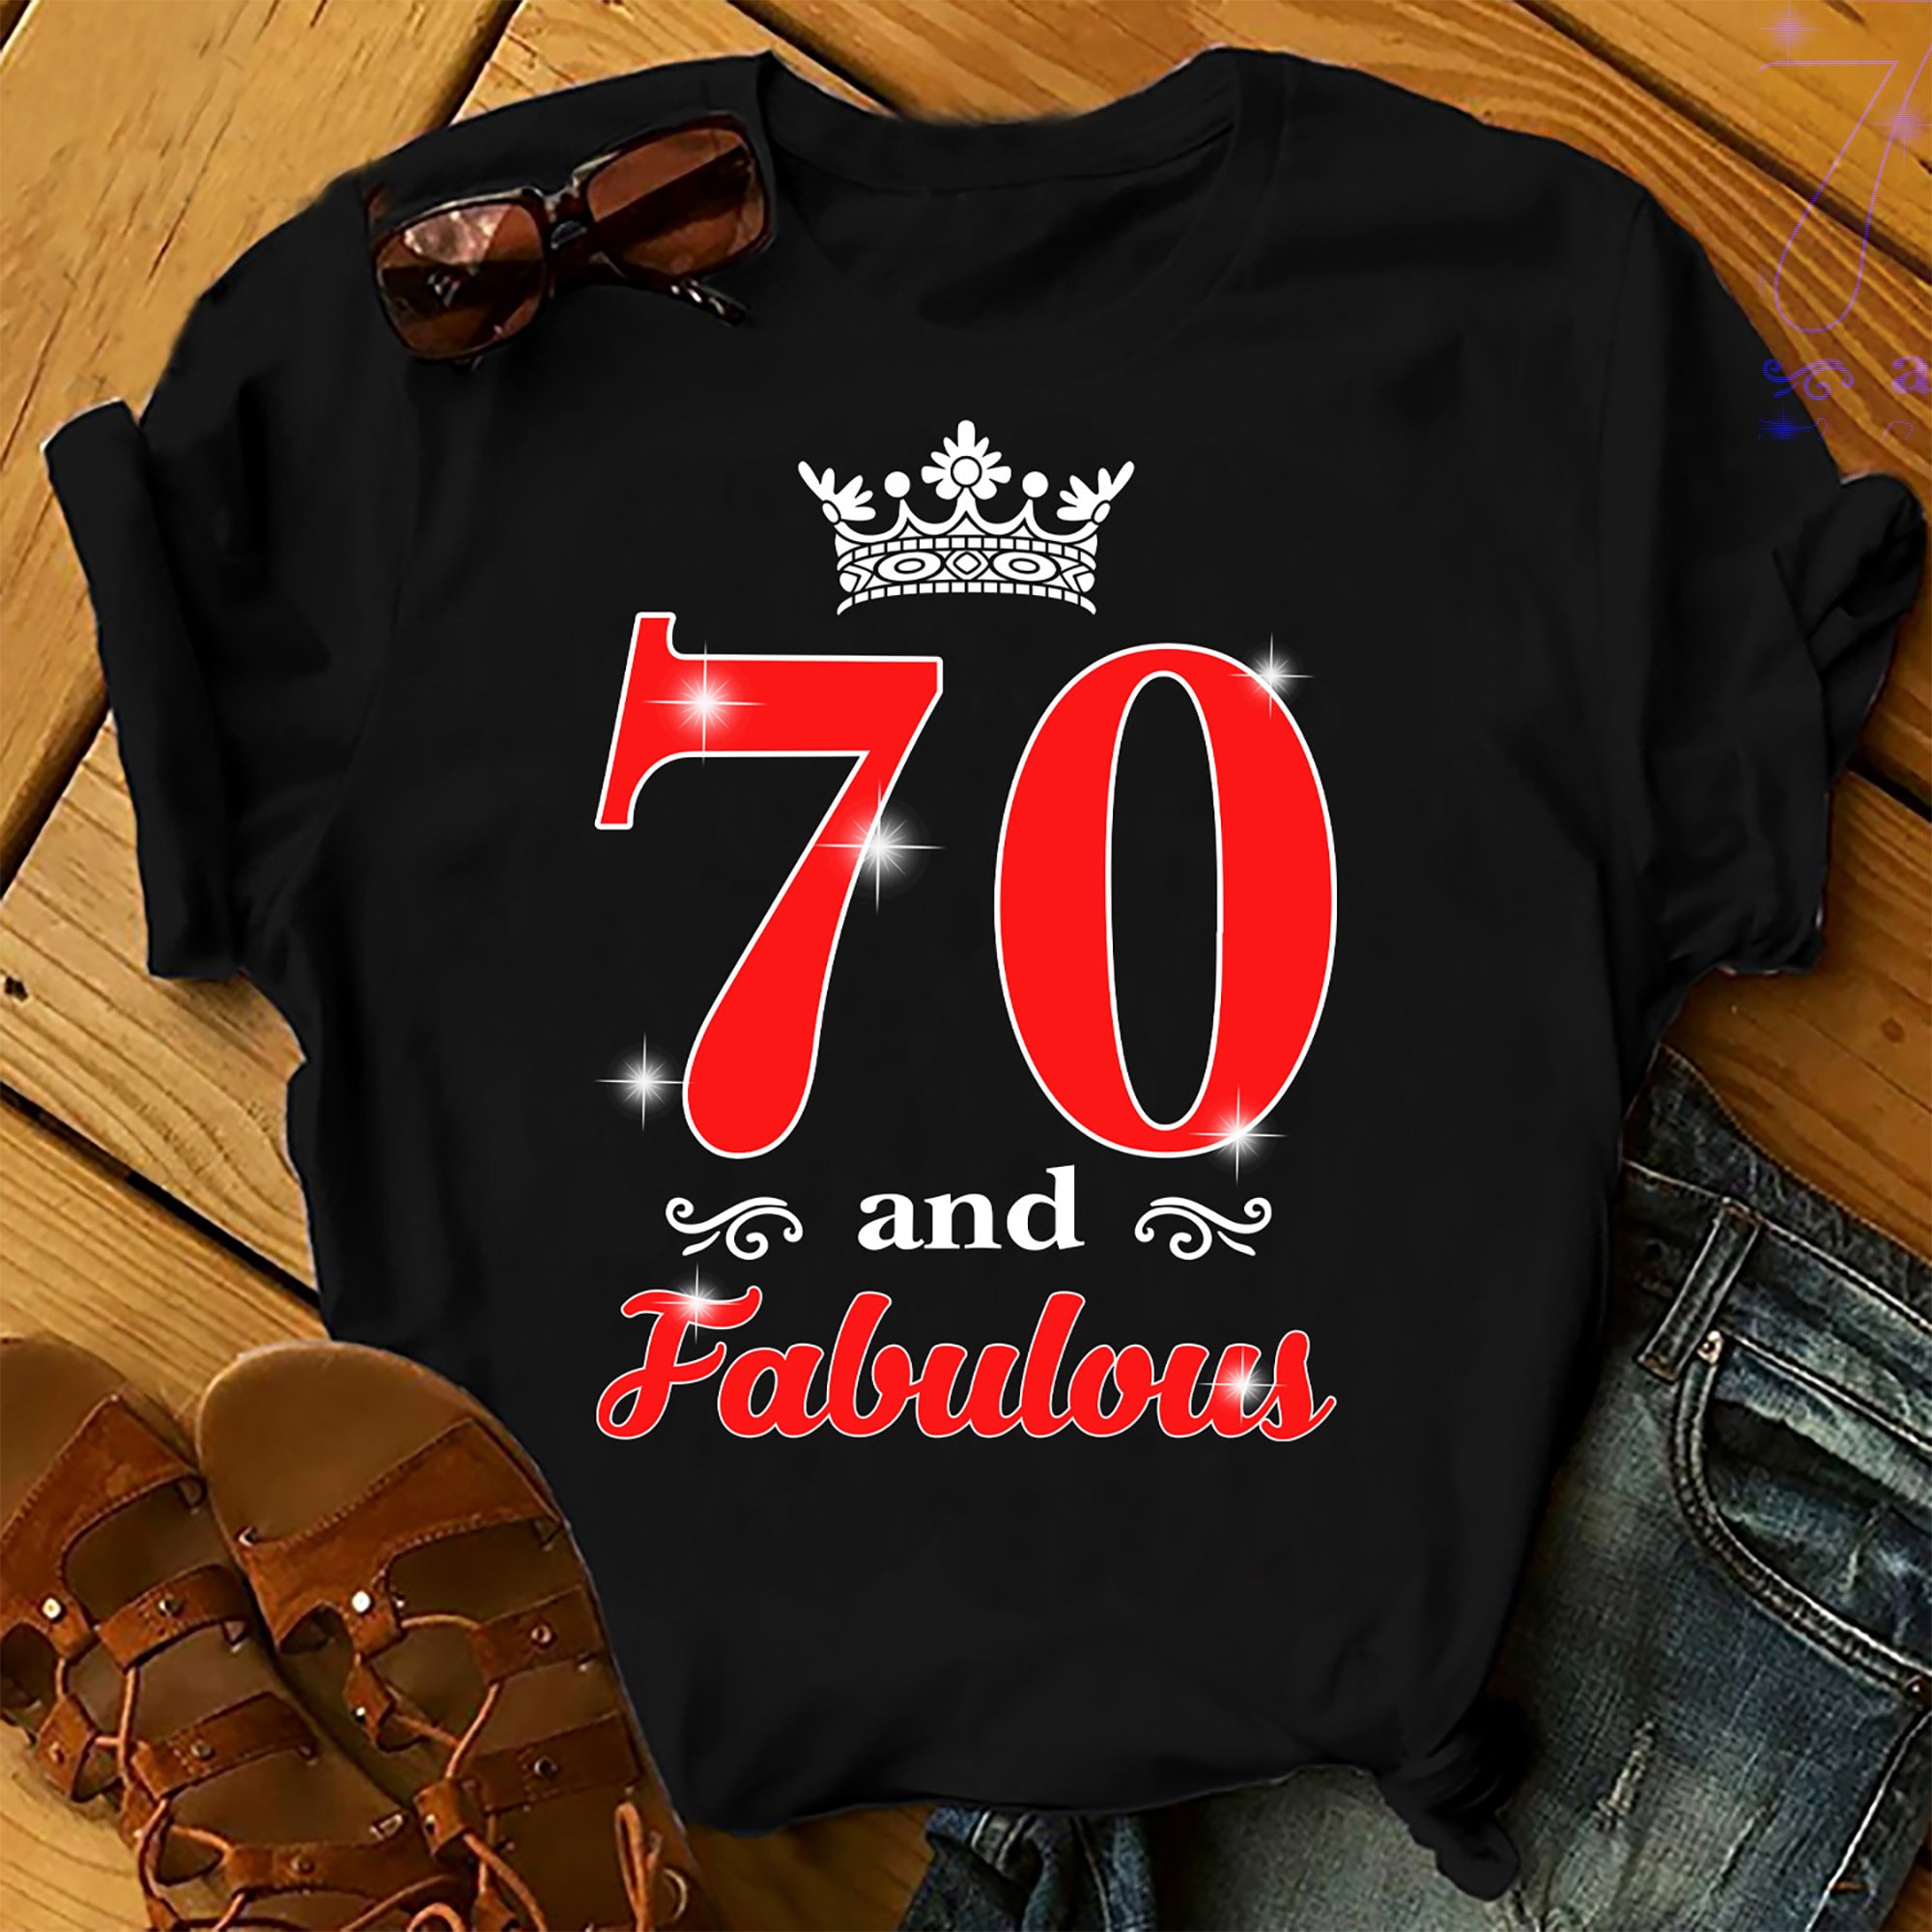 70 And Fabulous Queen – Shirts Women, Birthday T Shirts, Summer Tops, Beach T Shirts